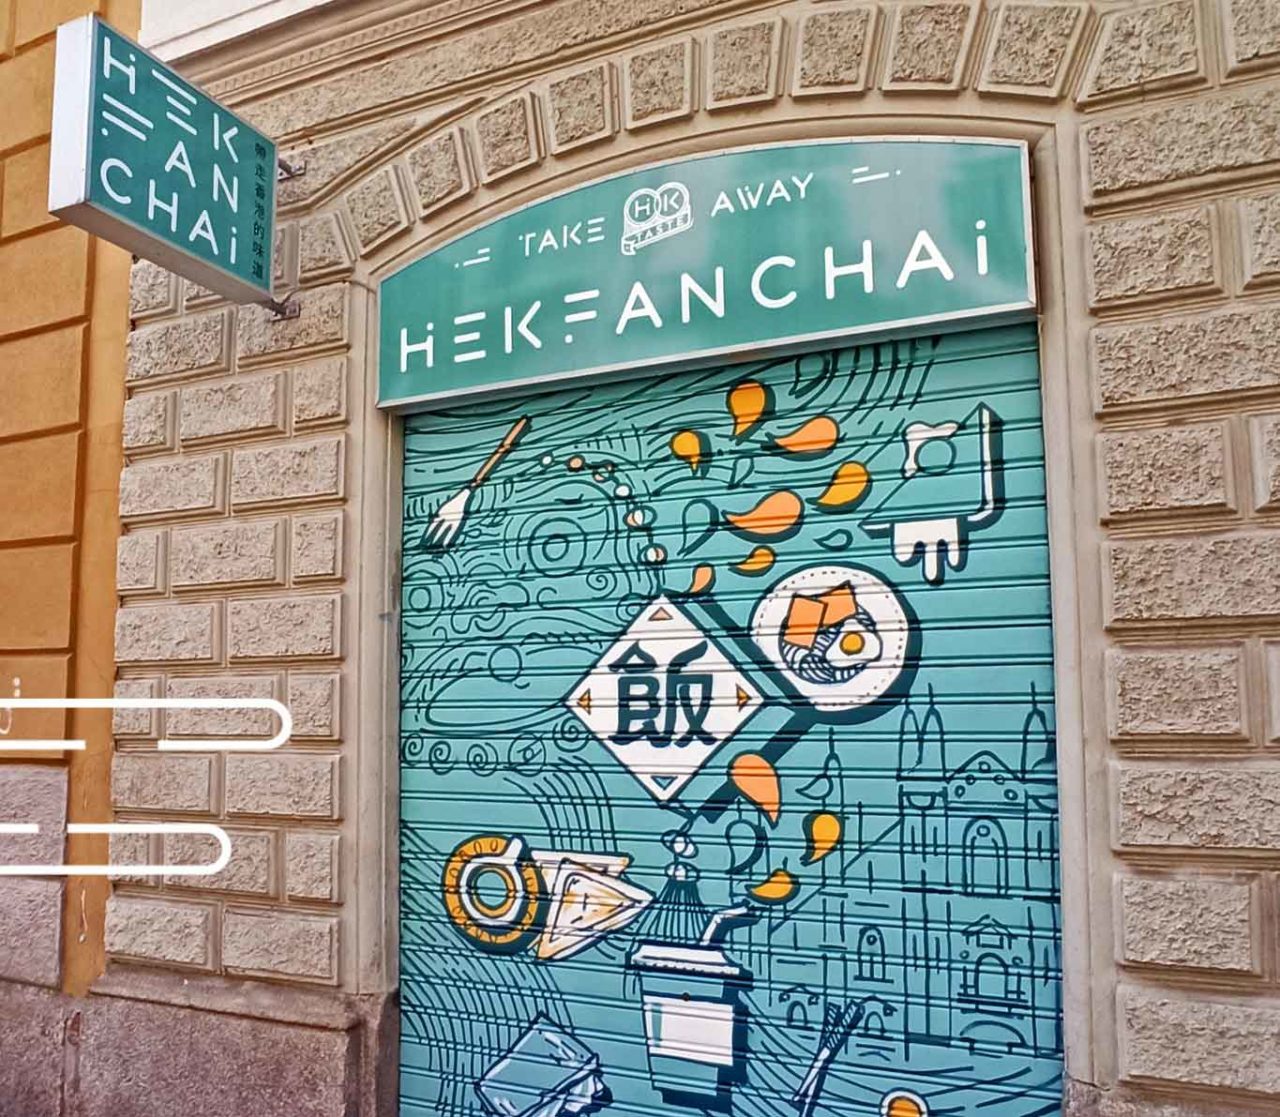 nuove aperture a Milano: hekfanchai chinatown